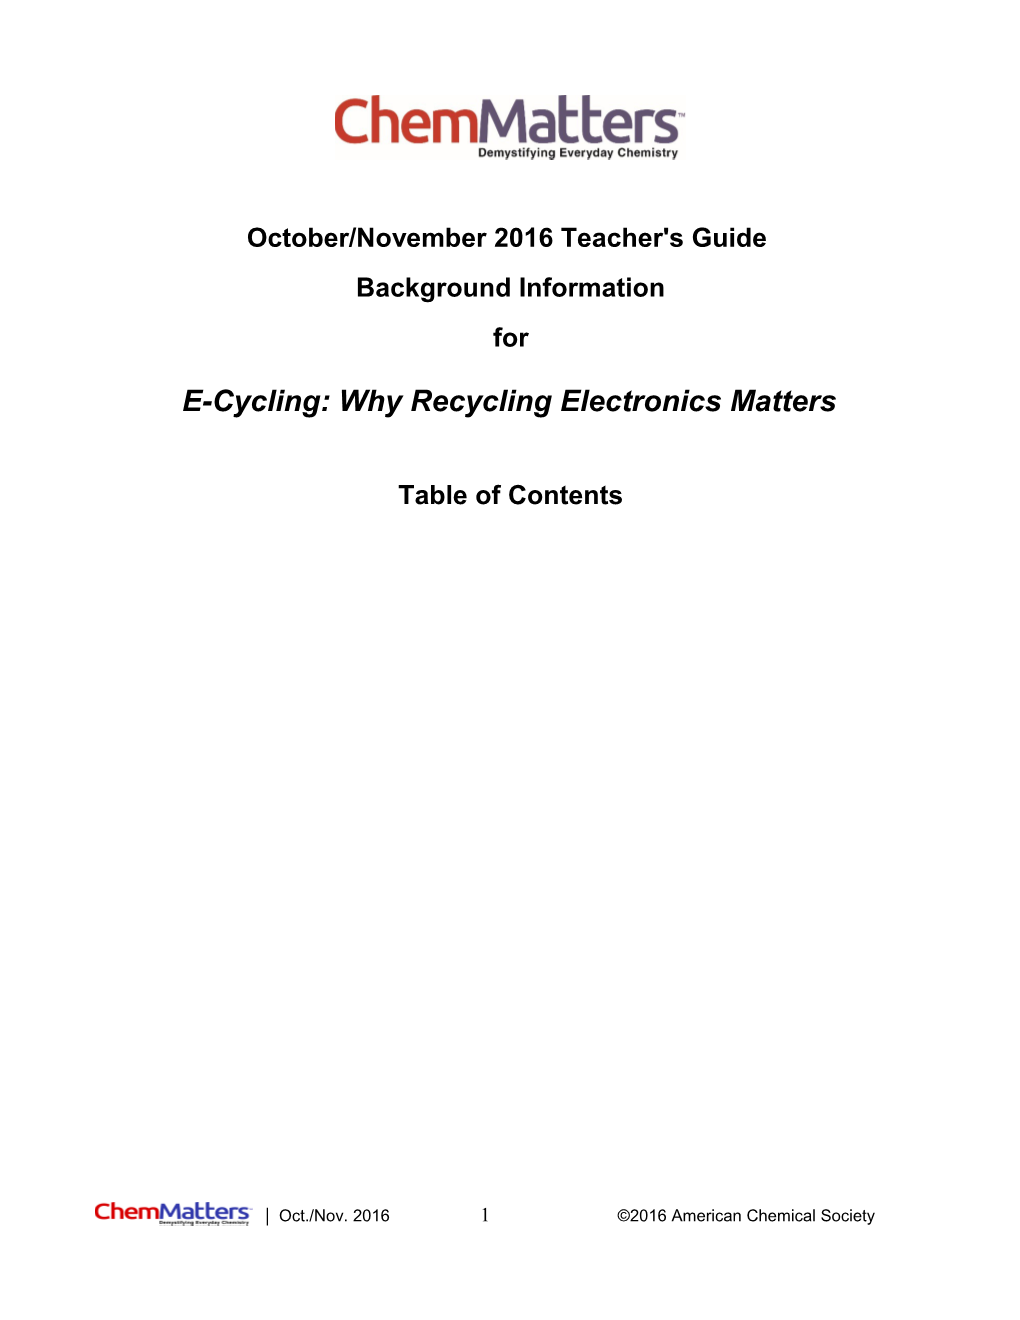 E-Cycling: Why Recycling Electronics Matters